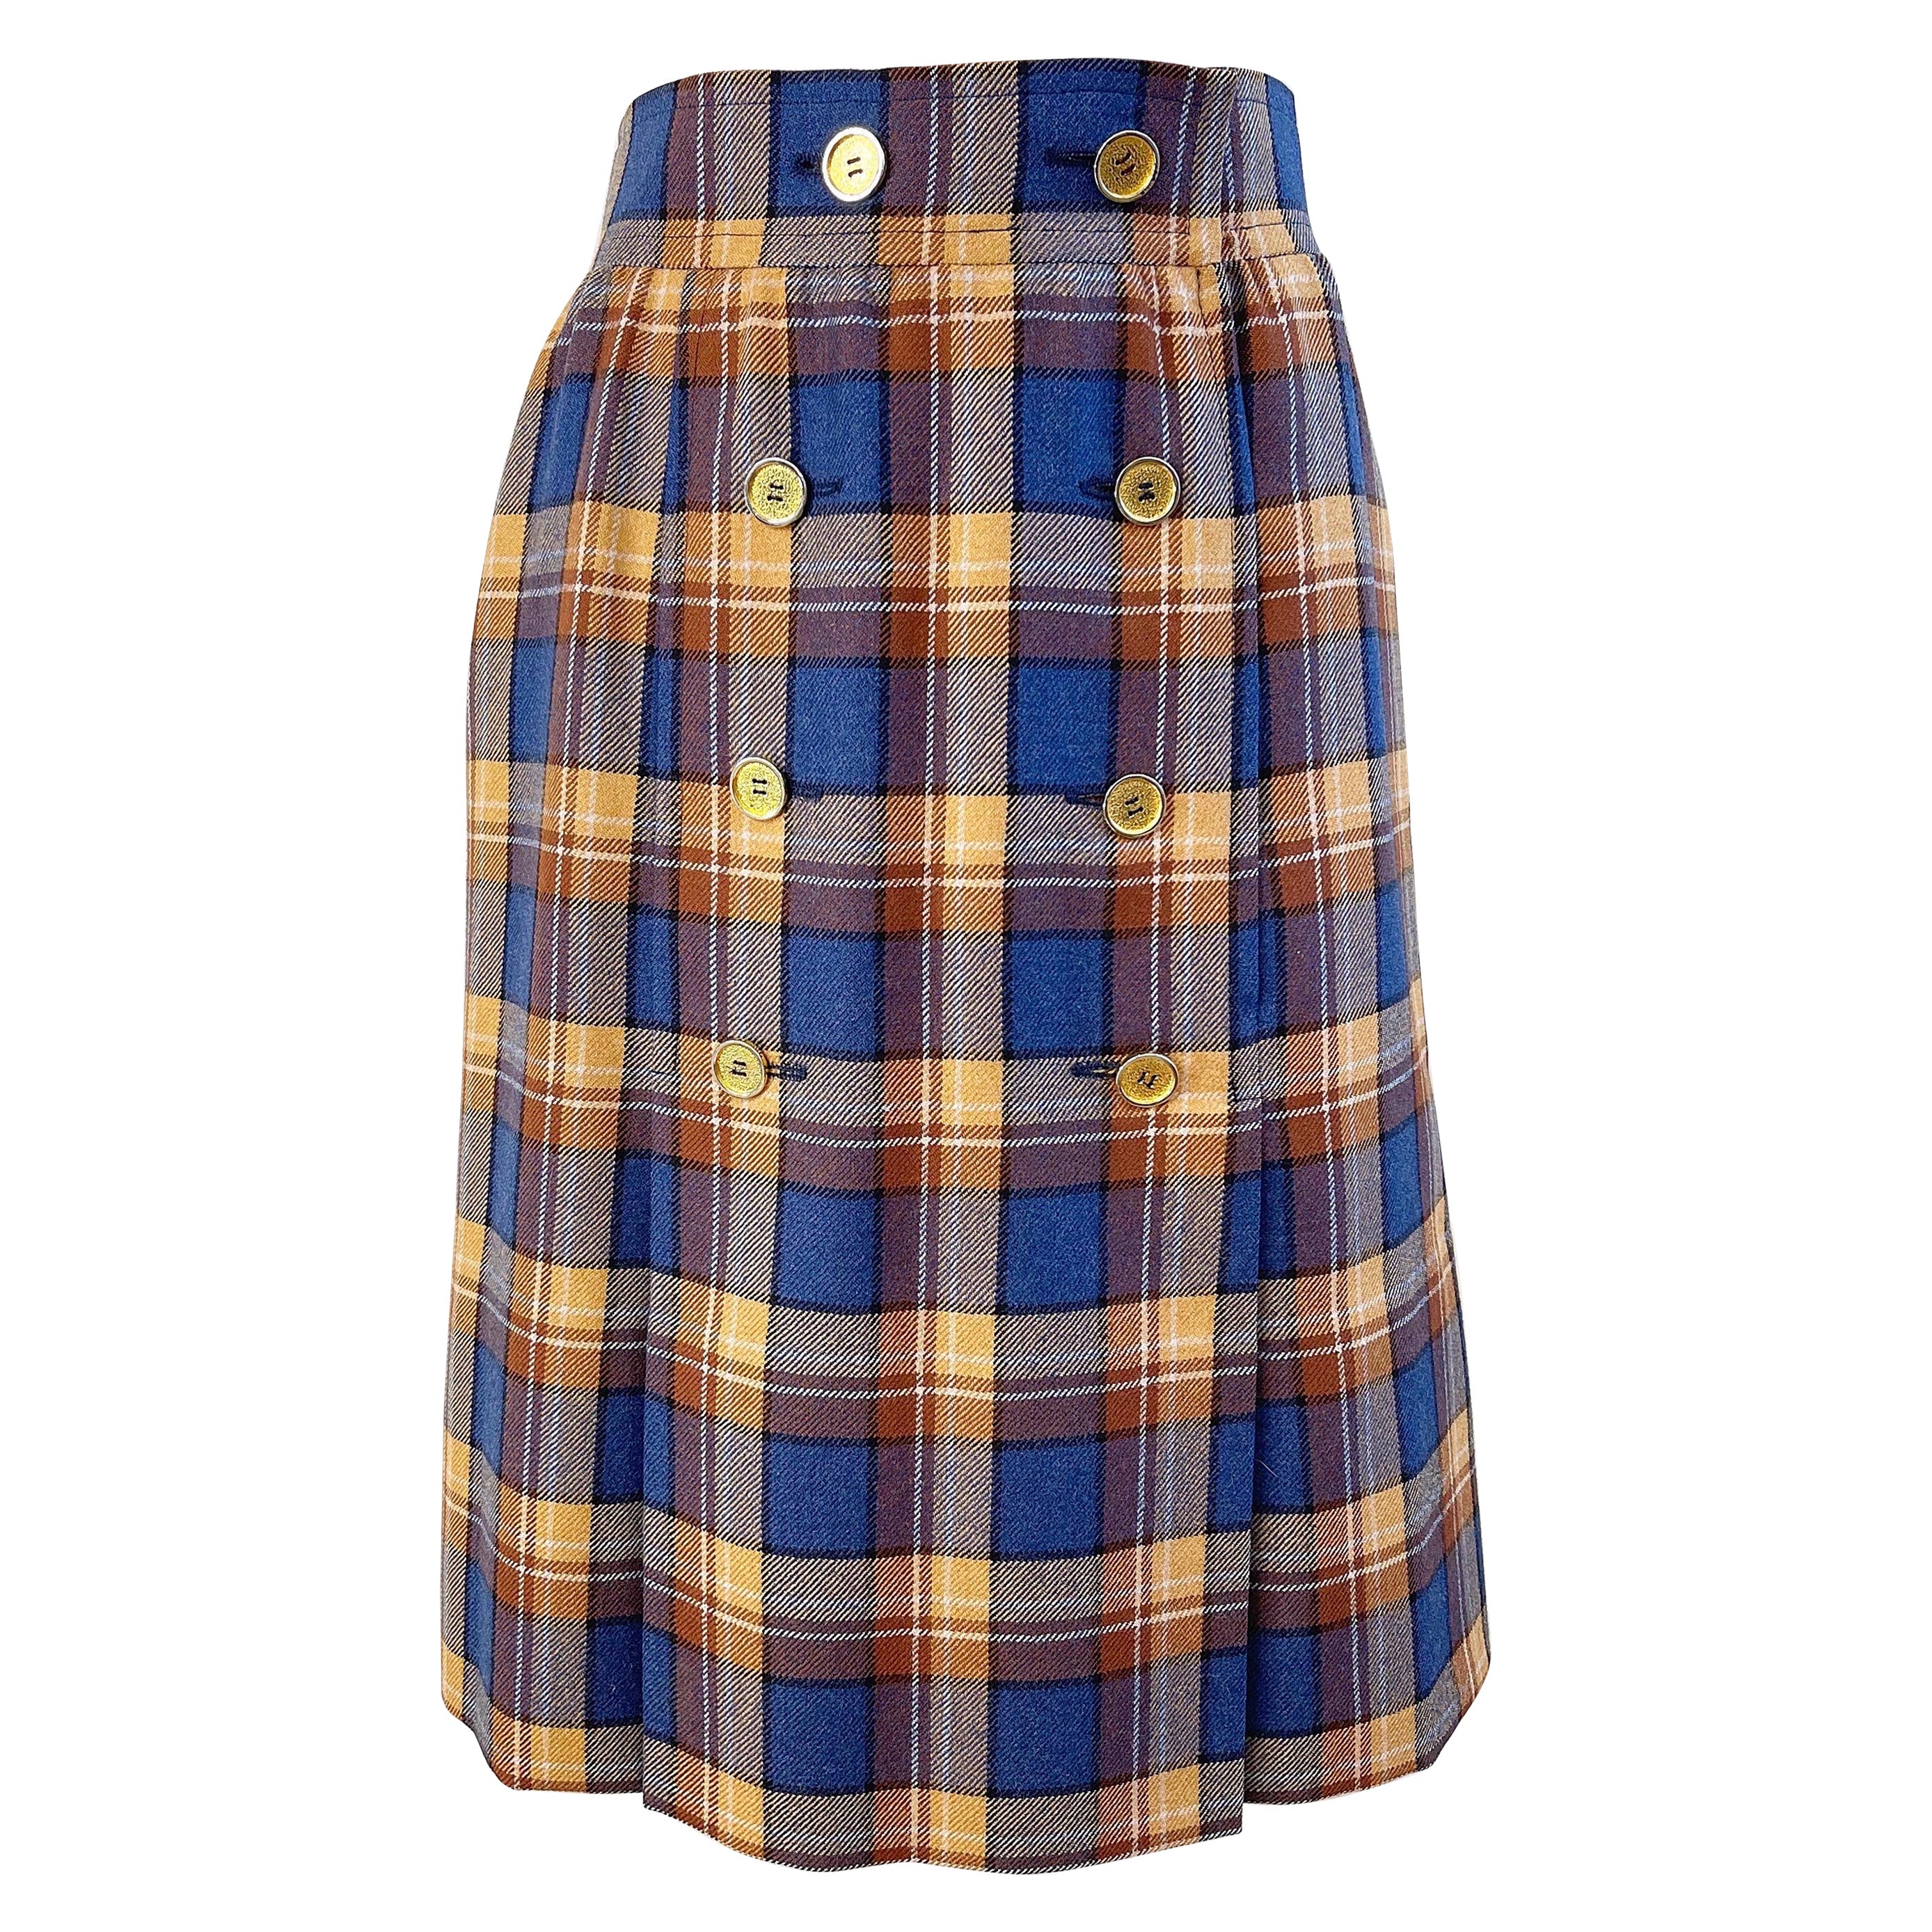 1970s Yves Saint Laurent Size 38 4/6 Navy Blue Brown Tan Vintage 70s Wool Skirt For Sale